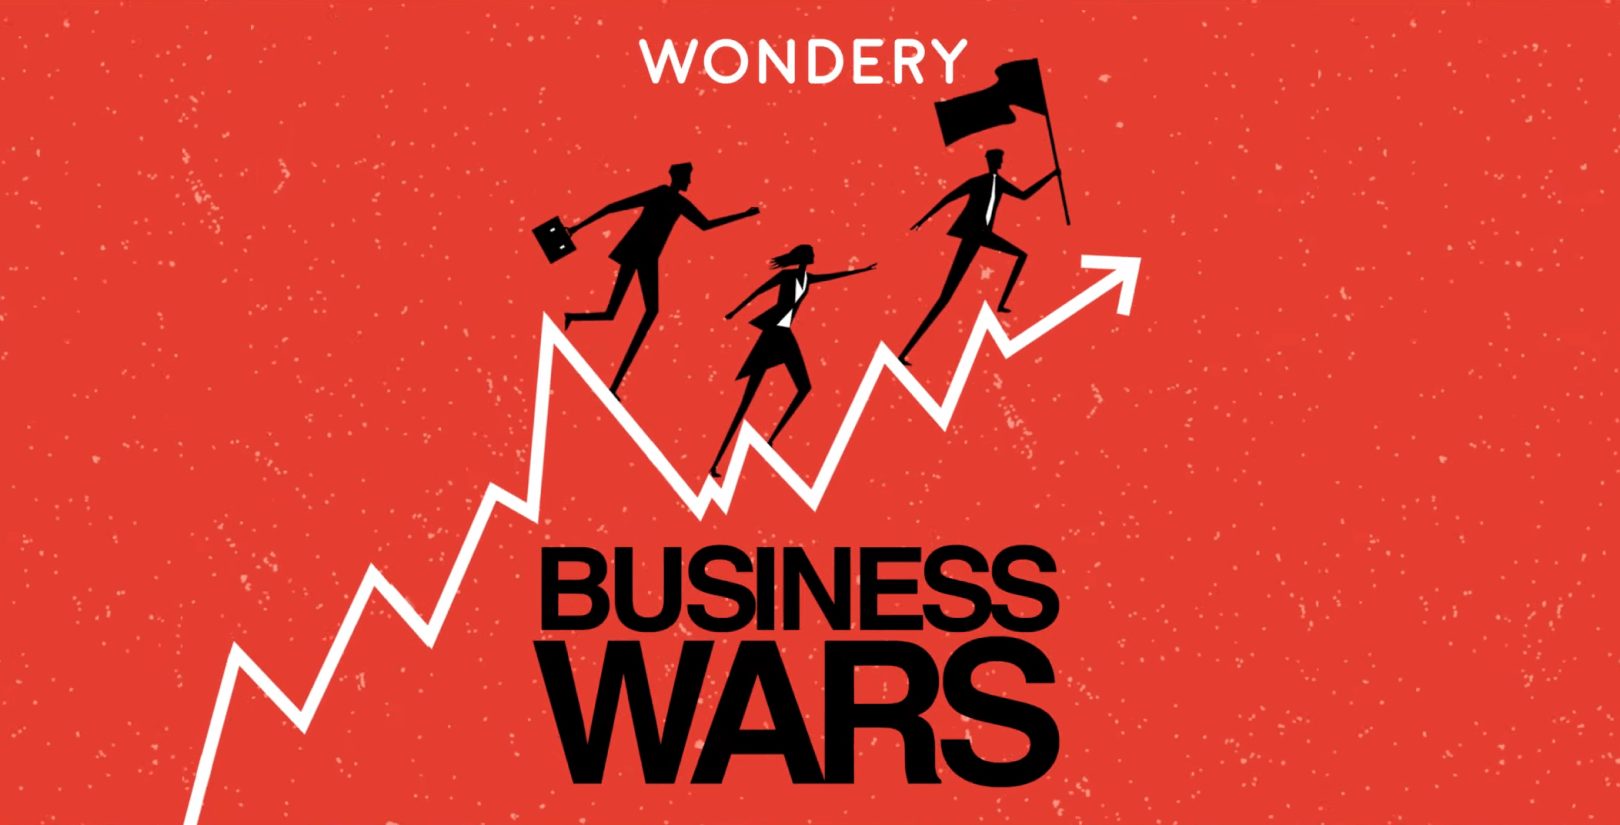 business wars